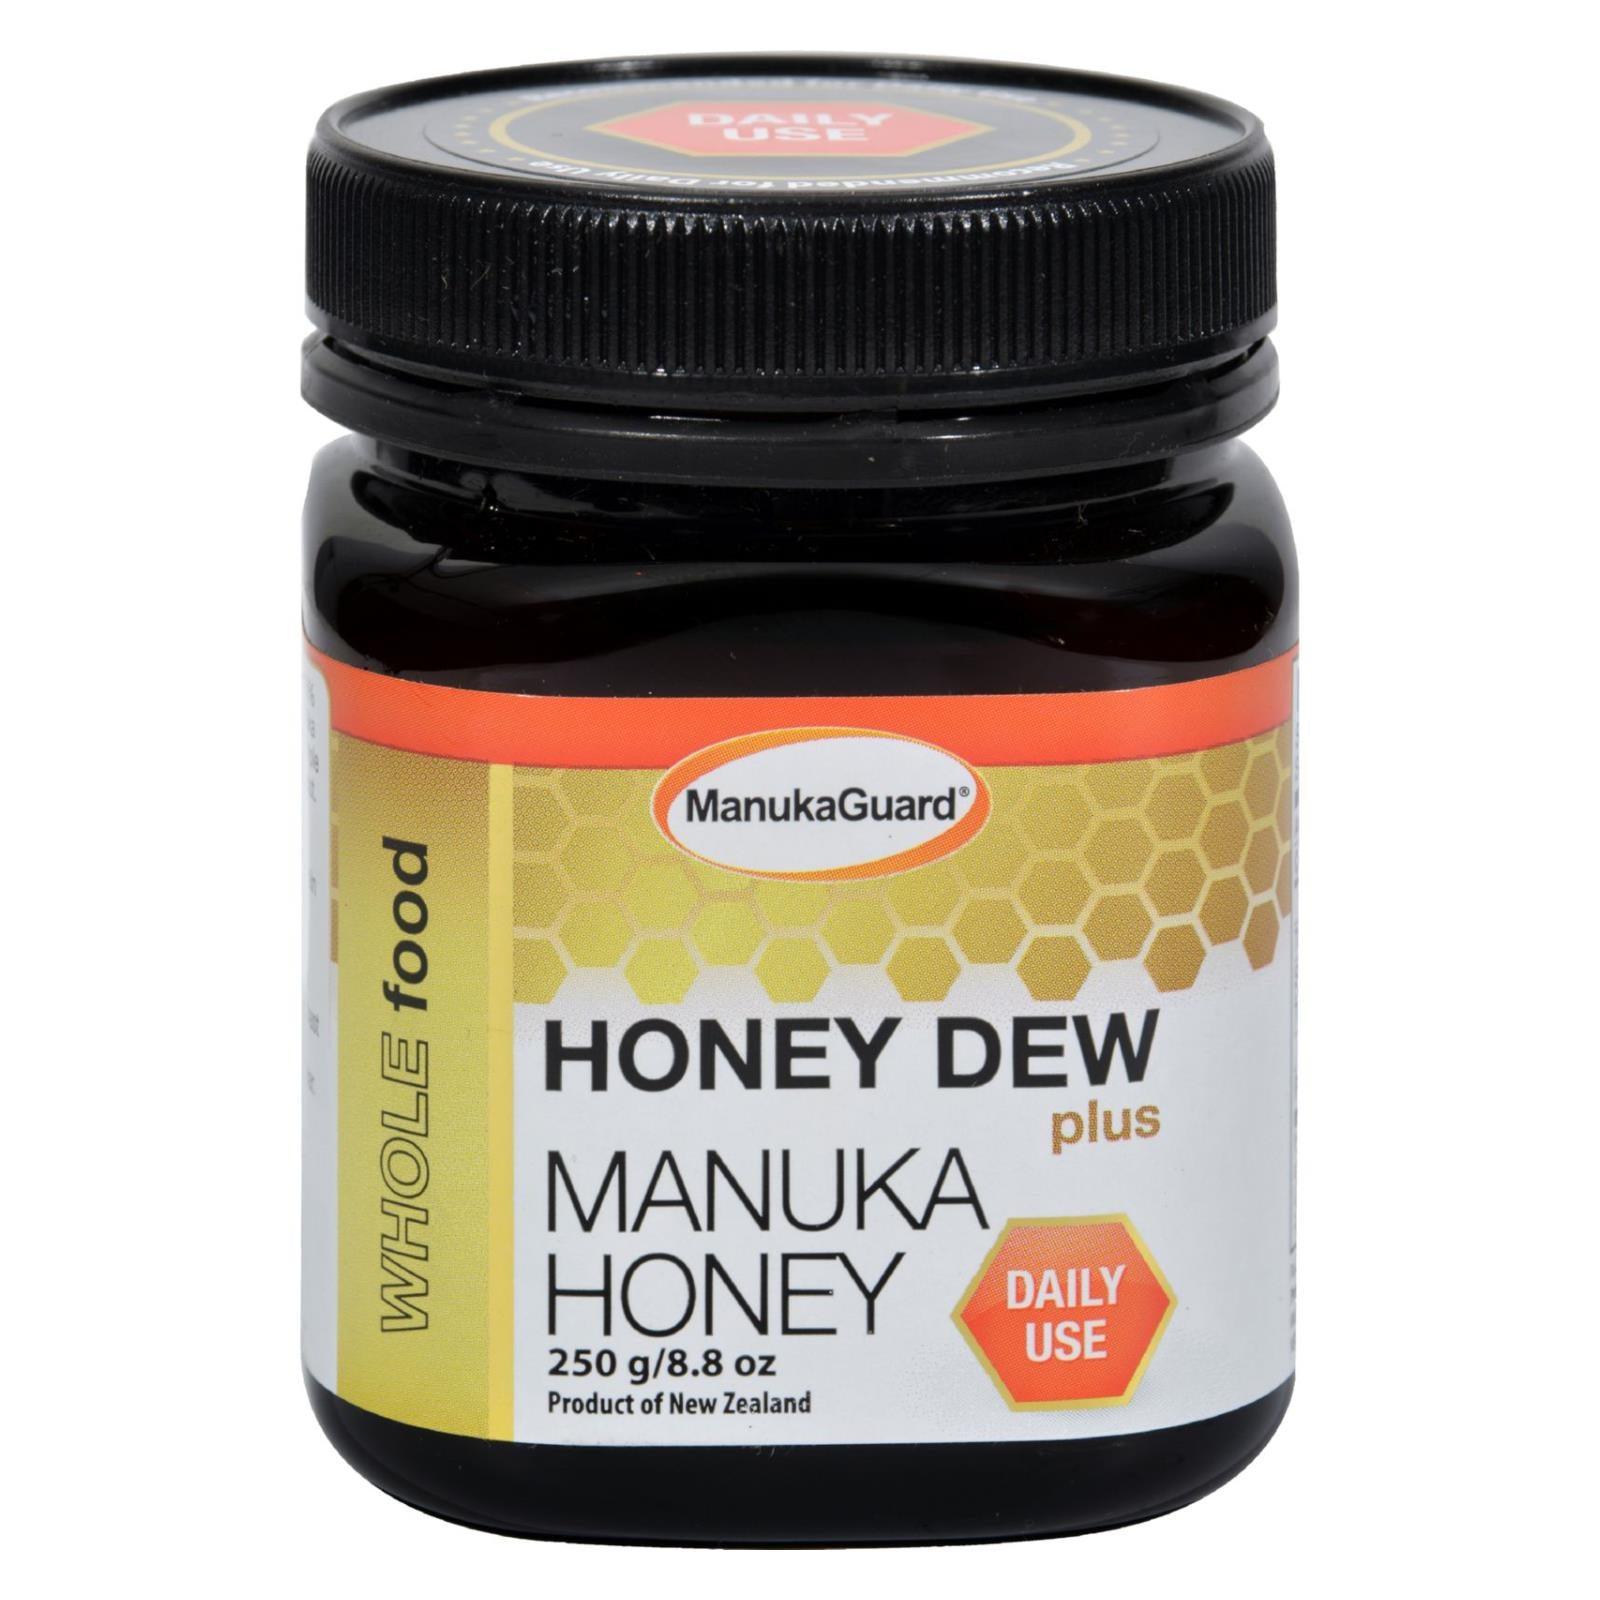 Manukaguard Manuka Honey - Honey Dew Plus - 8.8 Oz - Loomini